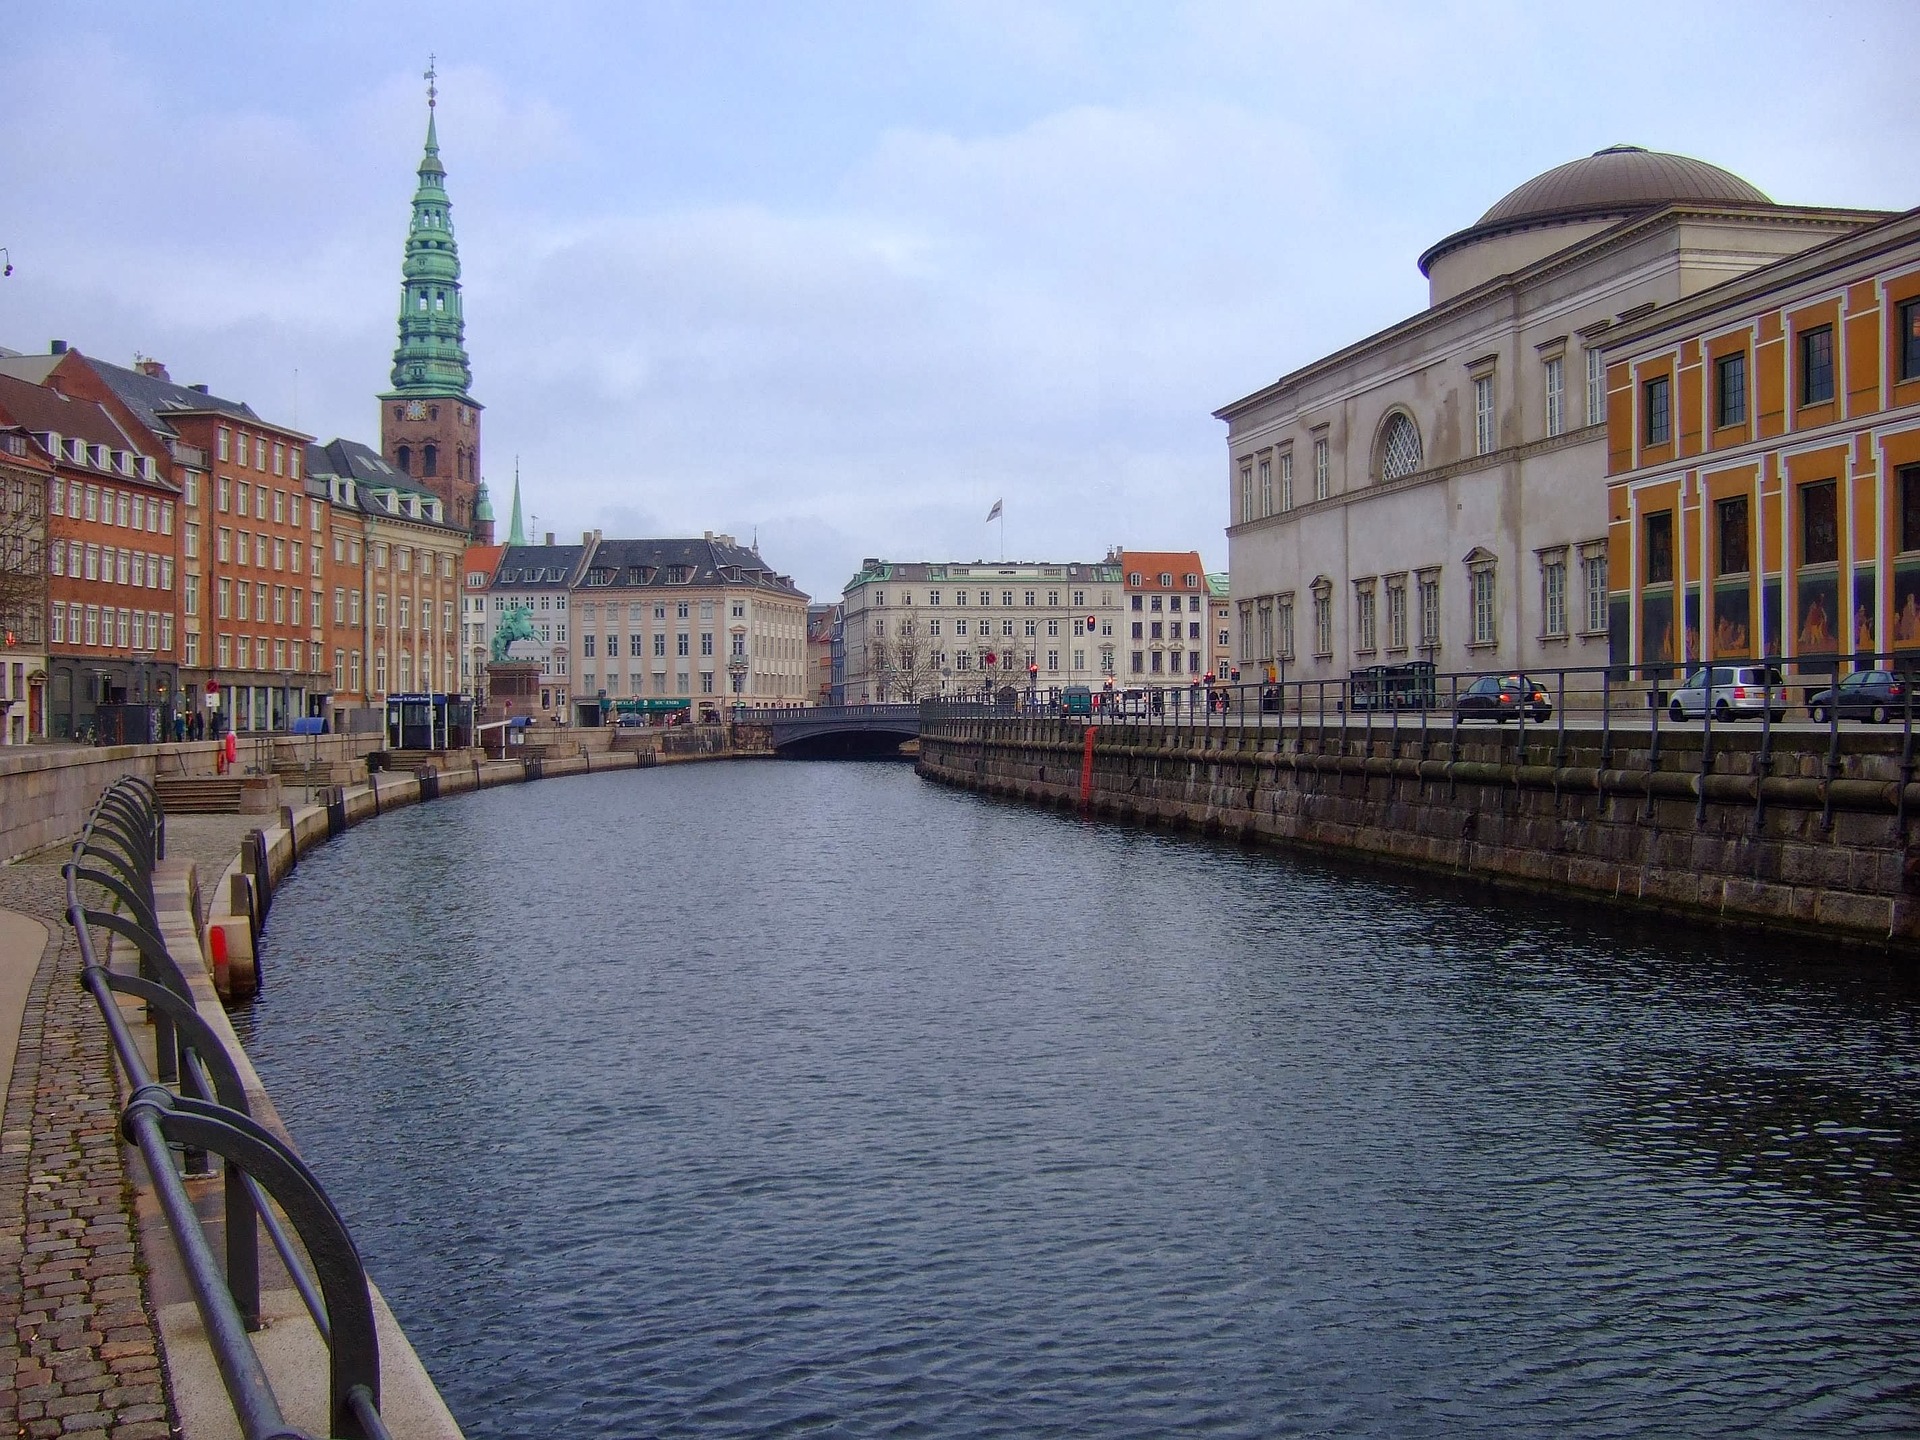 Canal in Nyhavn, Copenhagen, Denmark